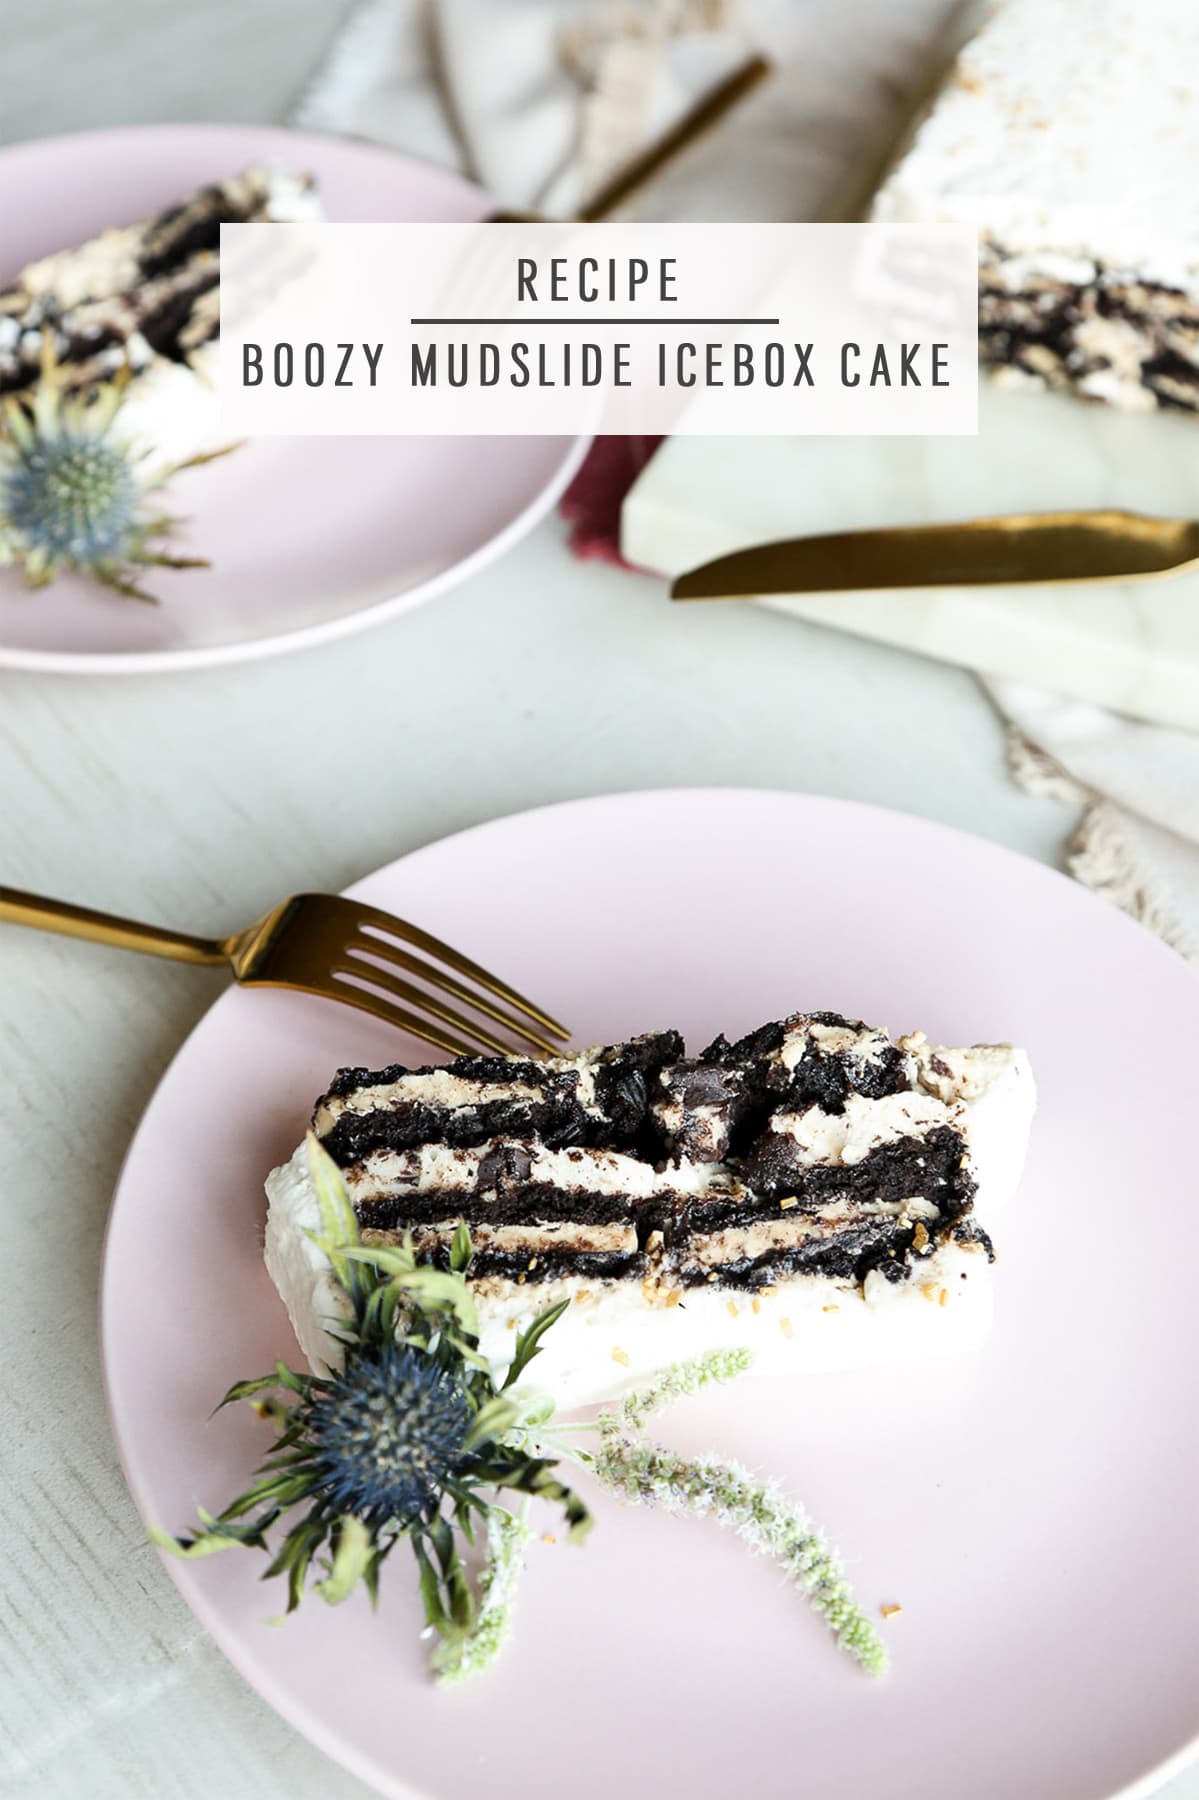 Boozy Mudslide Icebox Cake by Ashley Rose of Sugar & Cloth, a top lifestyle blog in Houston, Texas